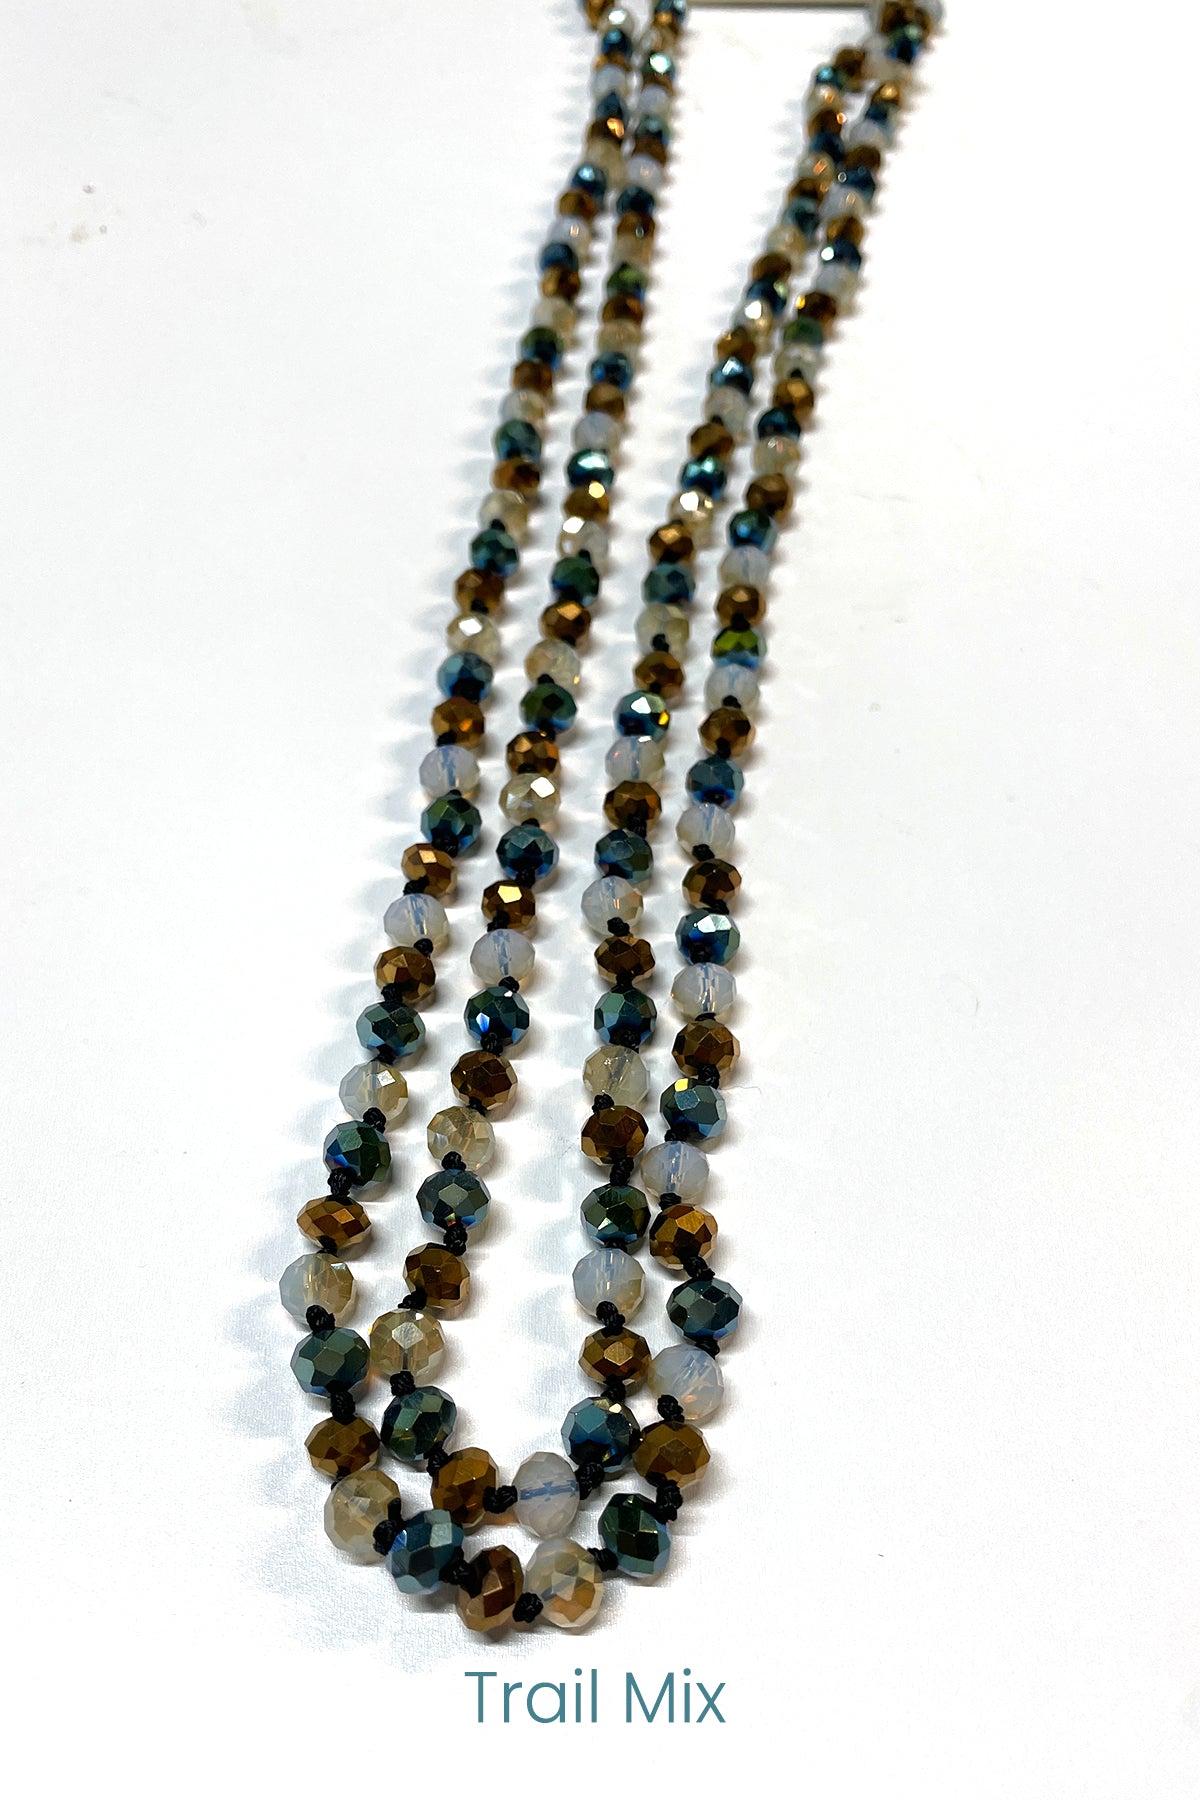 Wrap Necklaces 60" - All Colors jewelry ViVi Liam Jewelry Trail Mix 